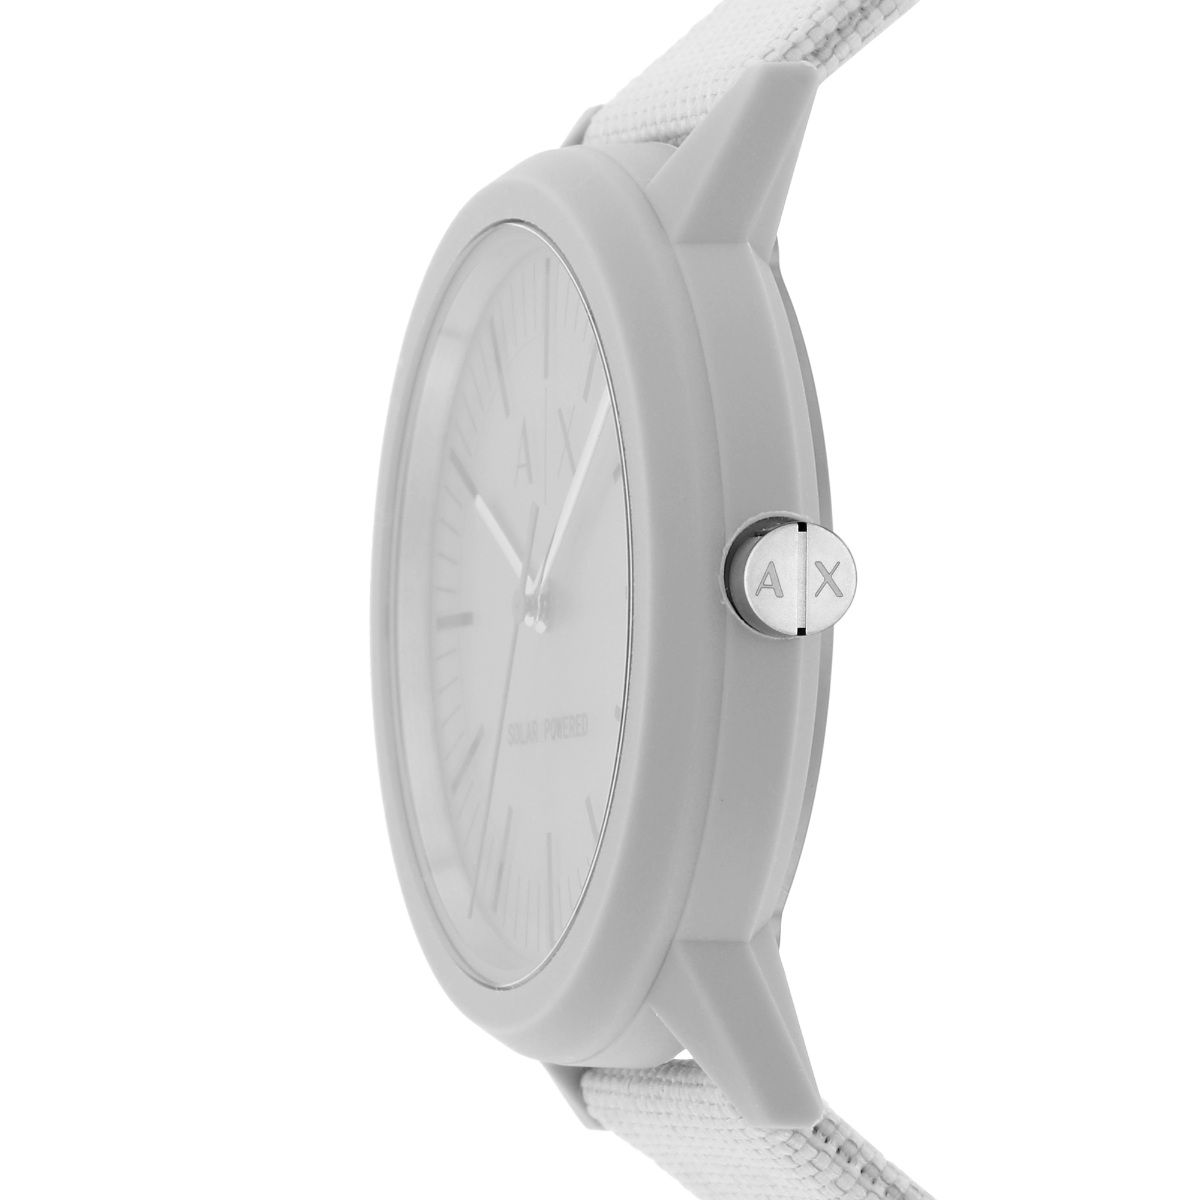 ARMANI EXCHANGE Grey Strap Casual Watch AX2733: Buy ARMANI